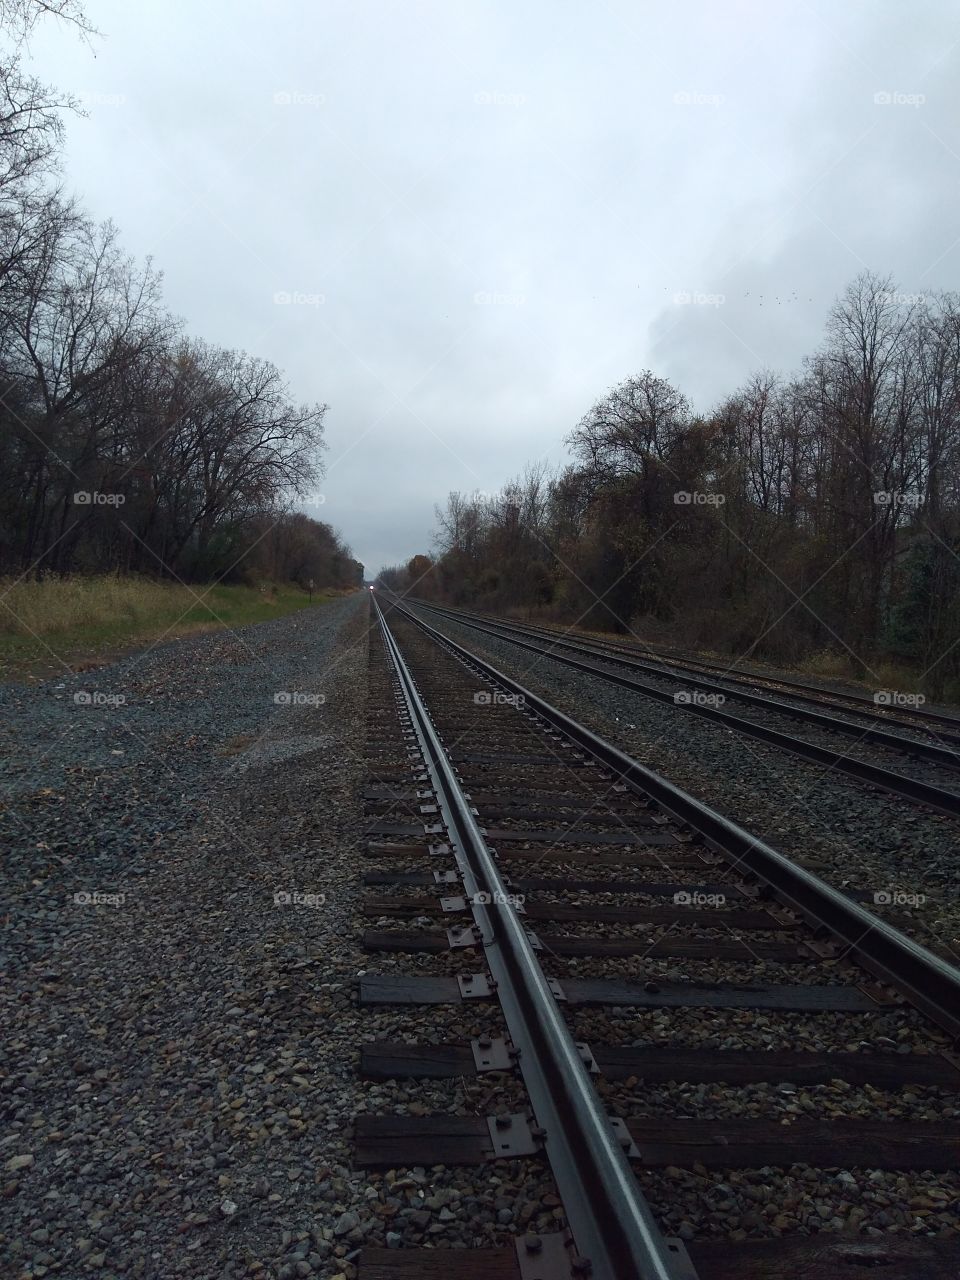 the empty train tracks